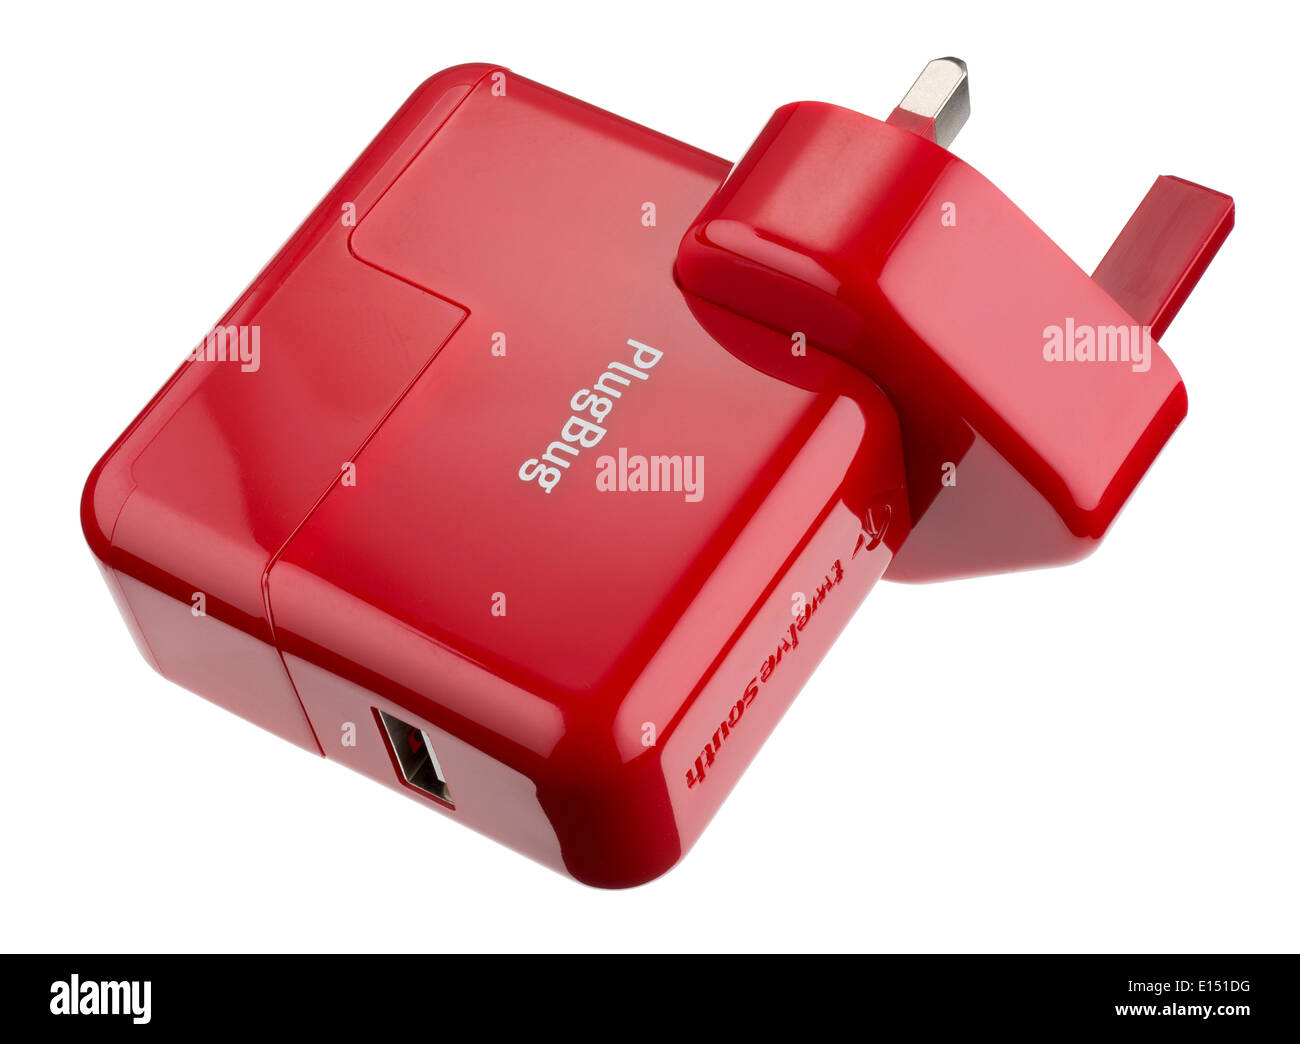 PlugBug ipad and MacBook wall charging device Stock Photo